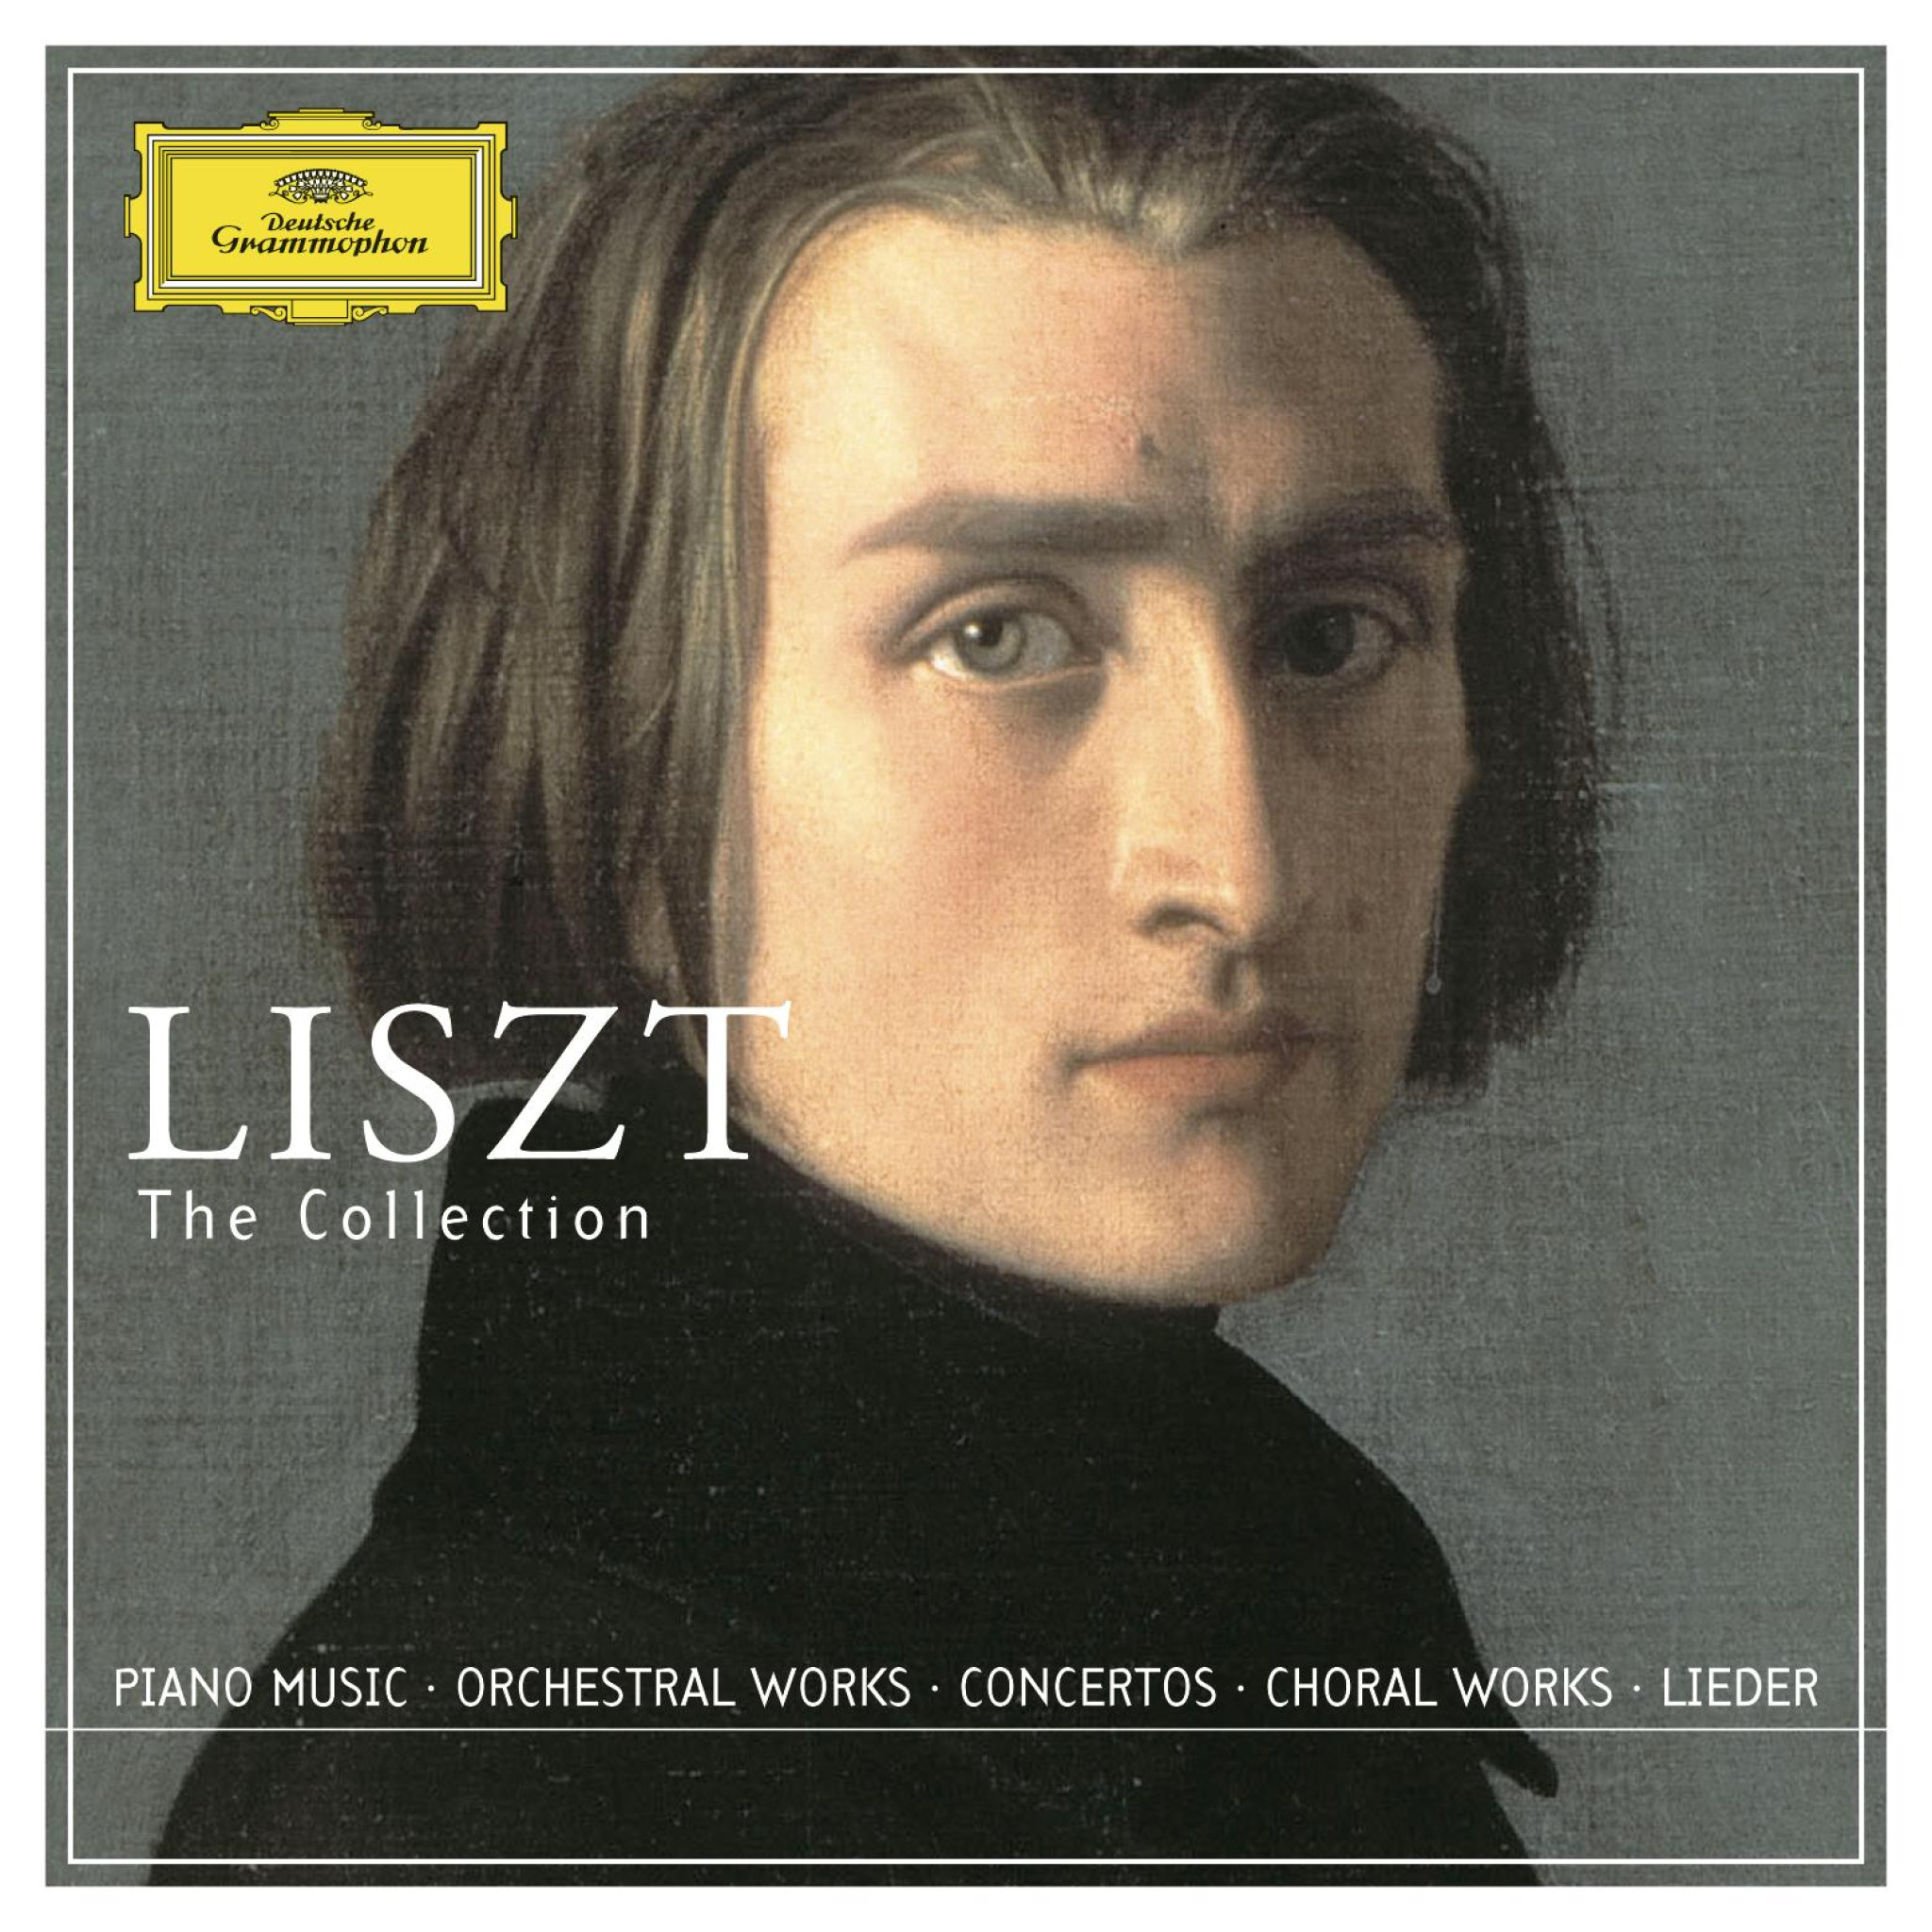 The Liszt Collection (Ltd. Edition)